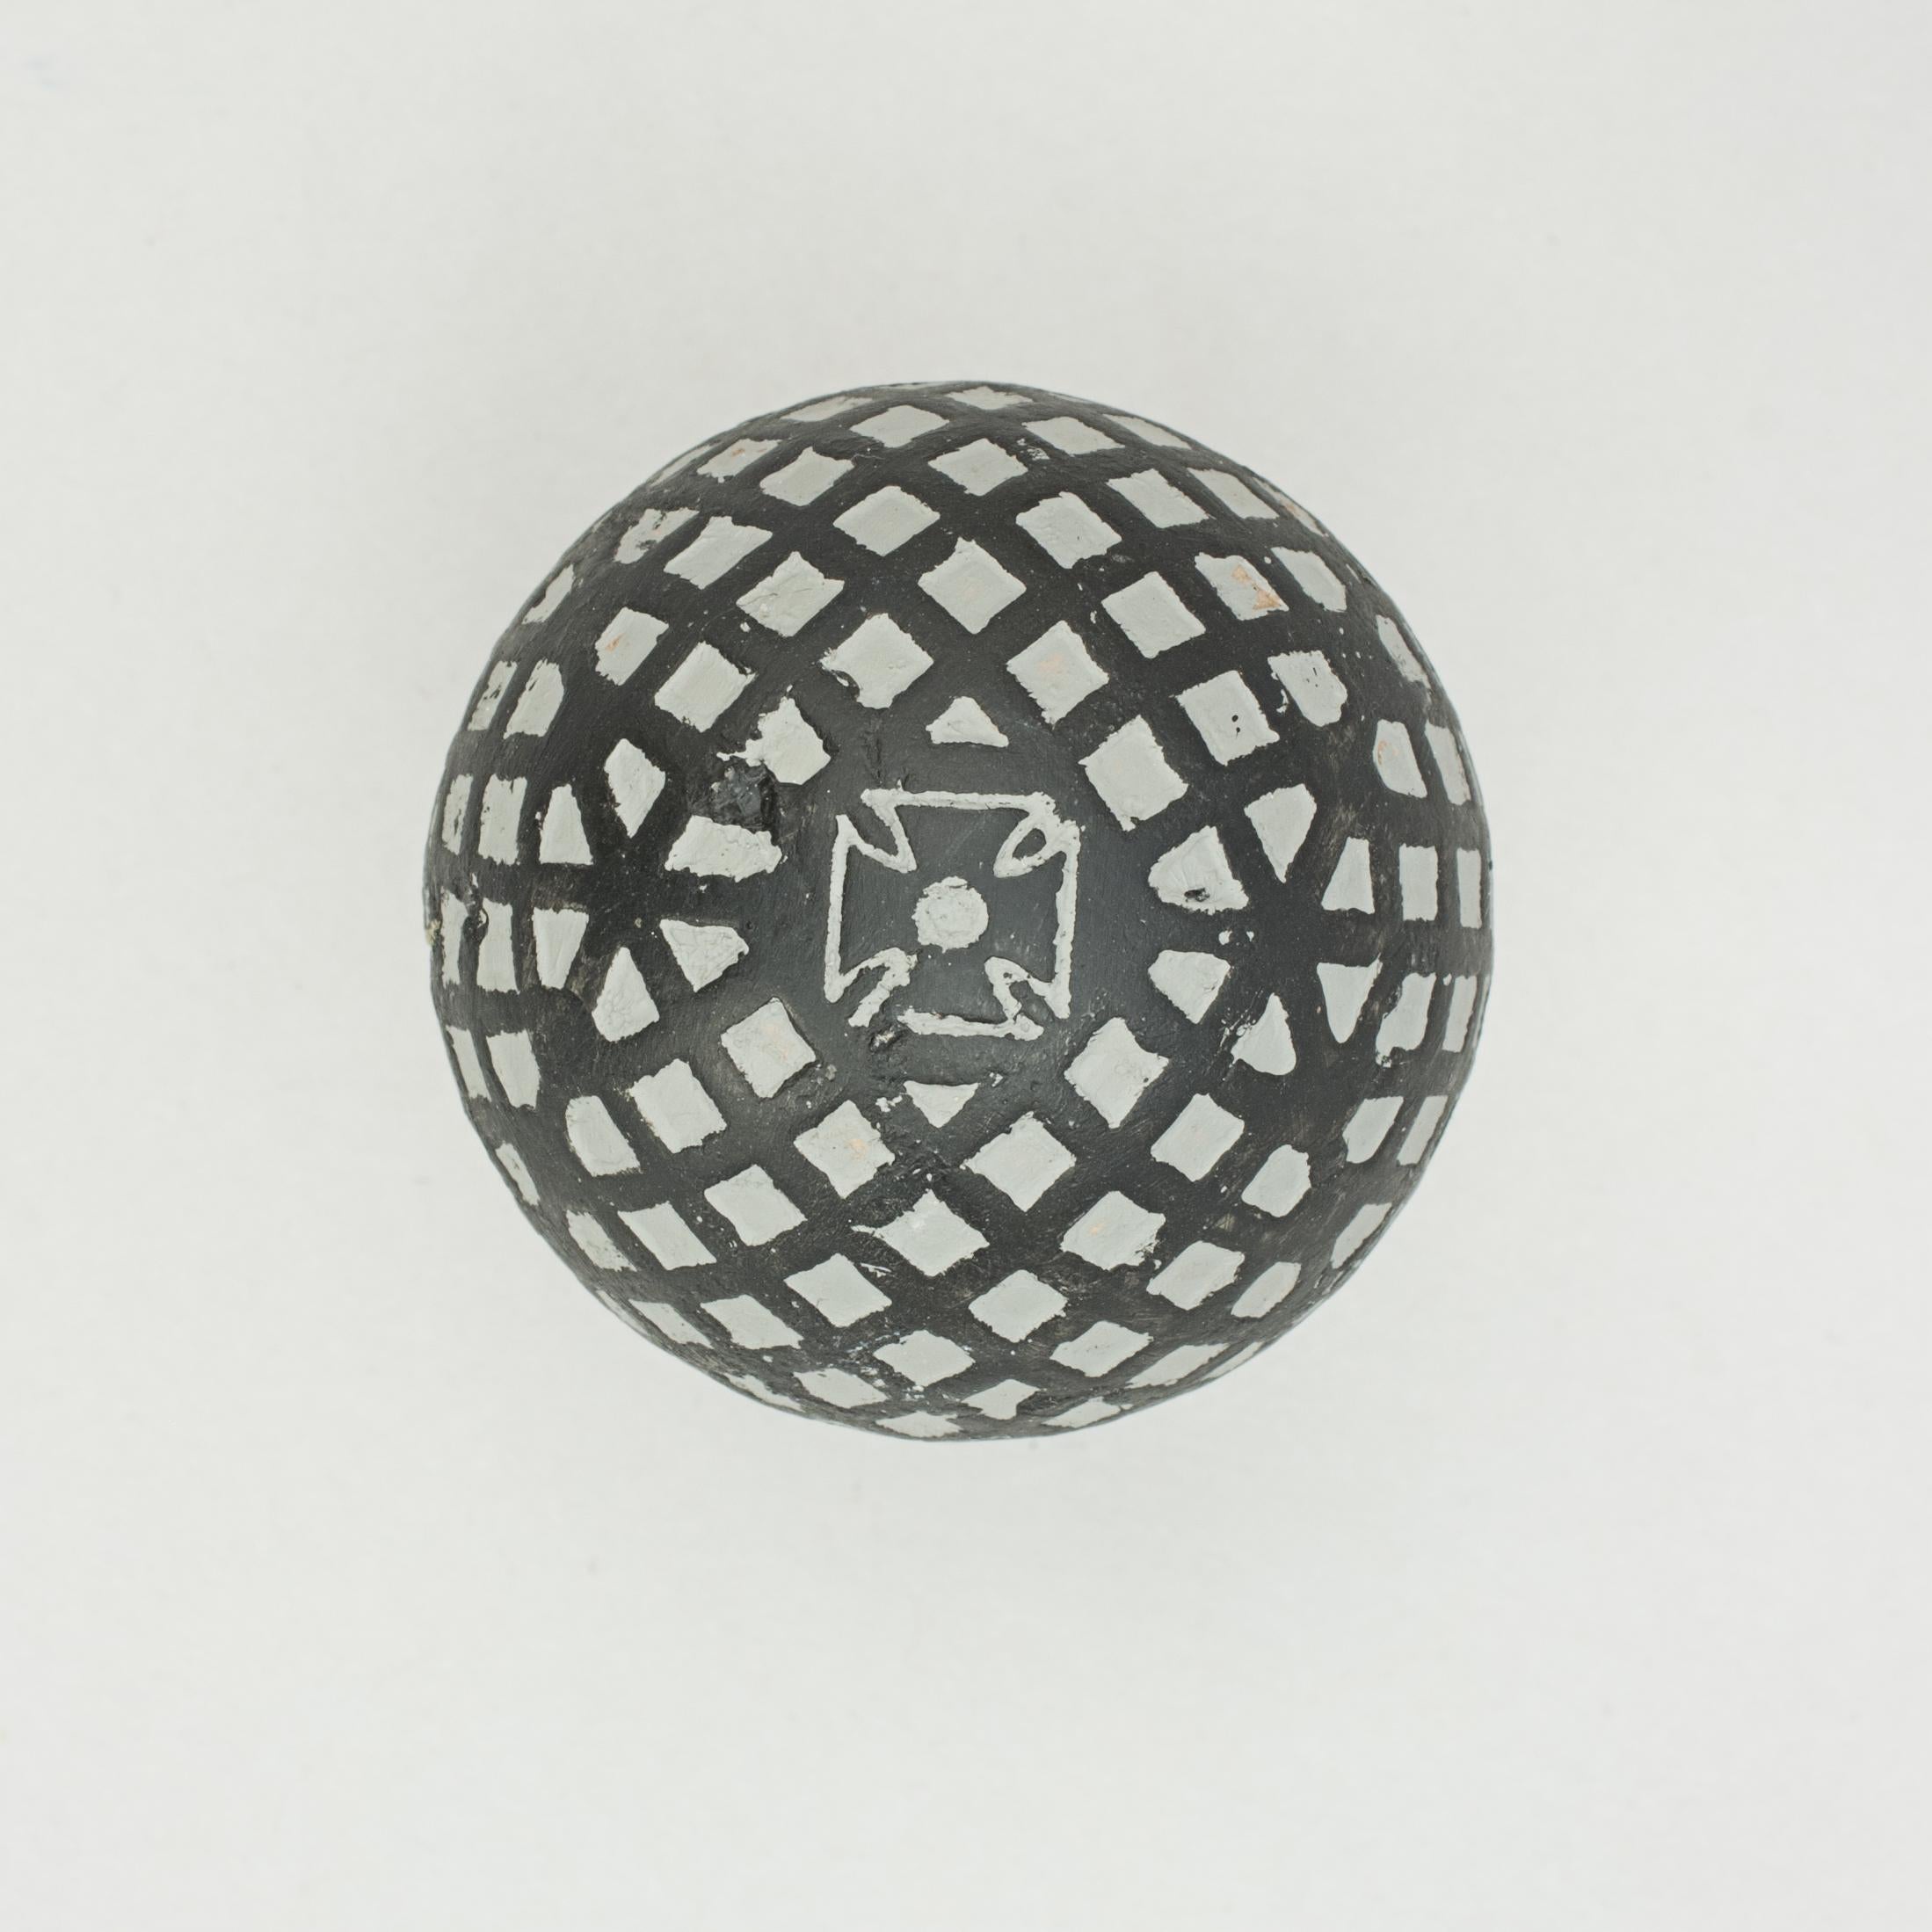 English Vintage Mesh Pattern Golf Ball, Rubber Core Maltese Cross, circa 1920